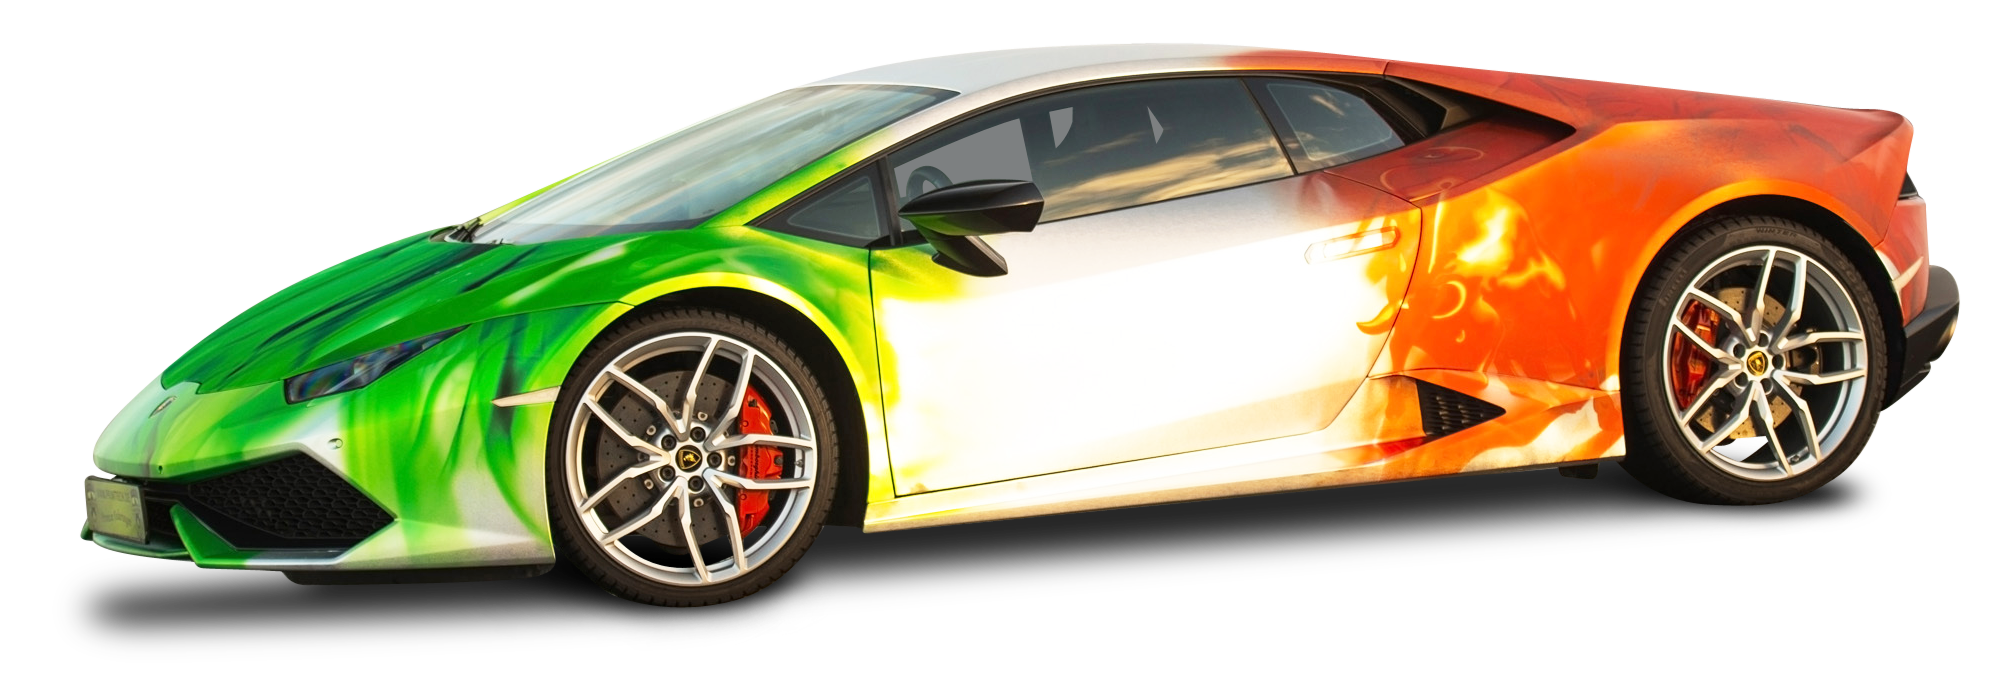 Lamborghini Huracan Car PNG Image